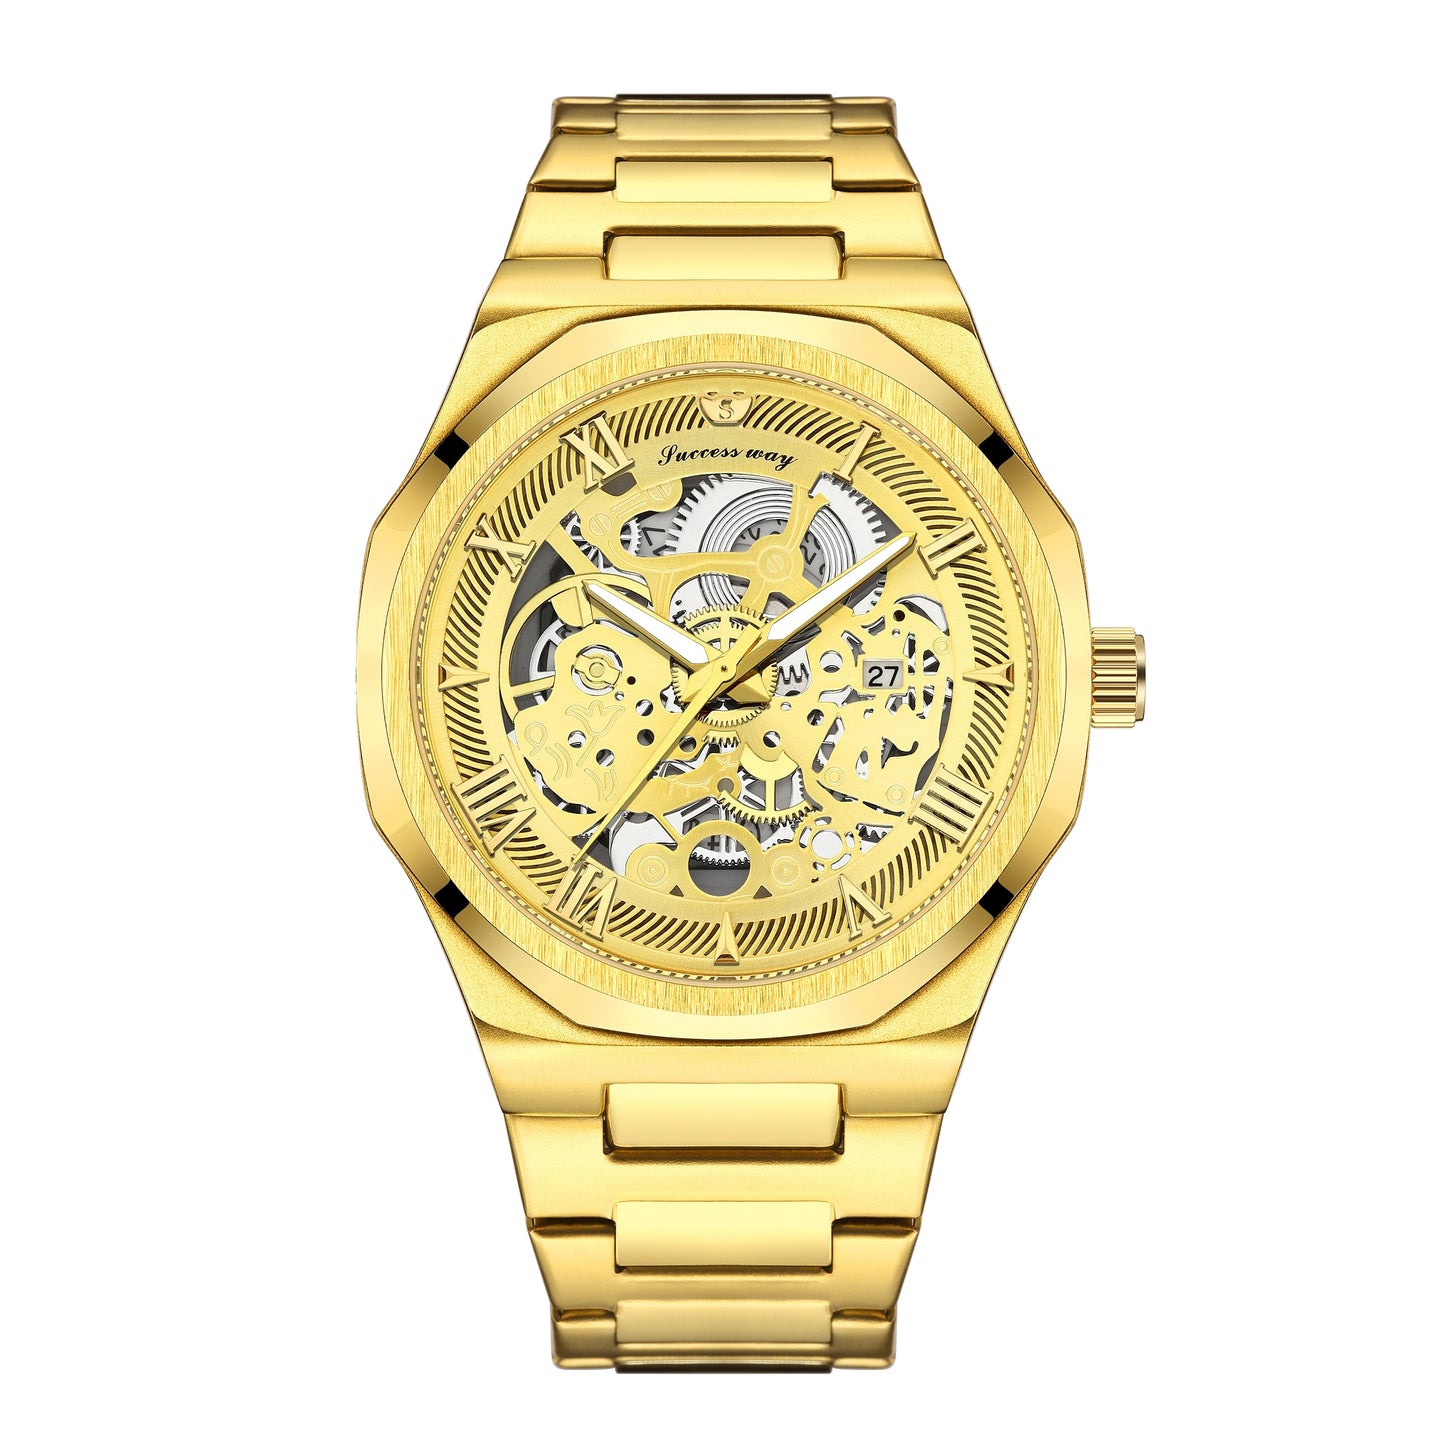 Reloj para Hombre Quartz Watches Men Stainless Steel Business Sport Date Wristwatch Luminous